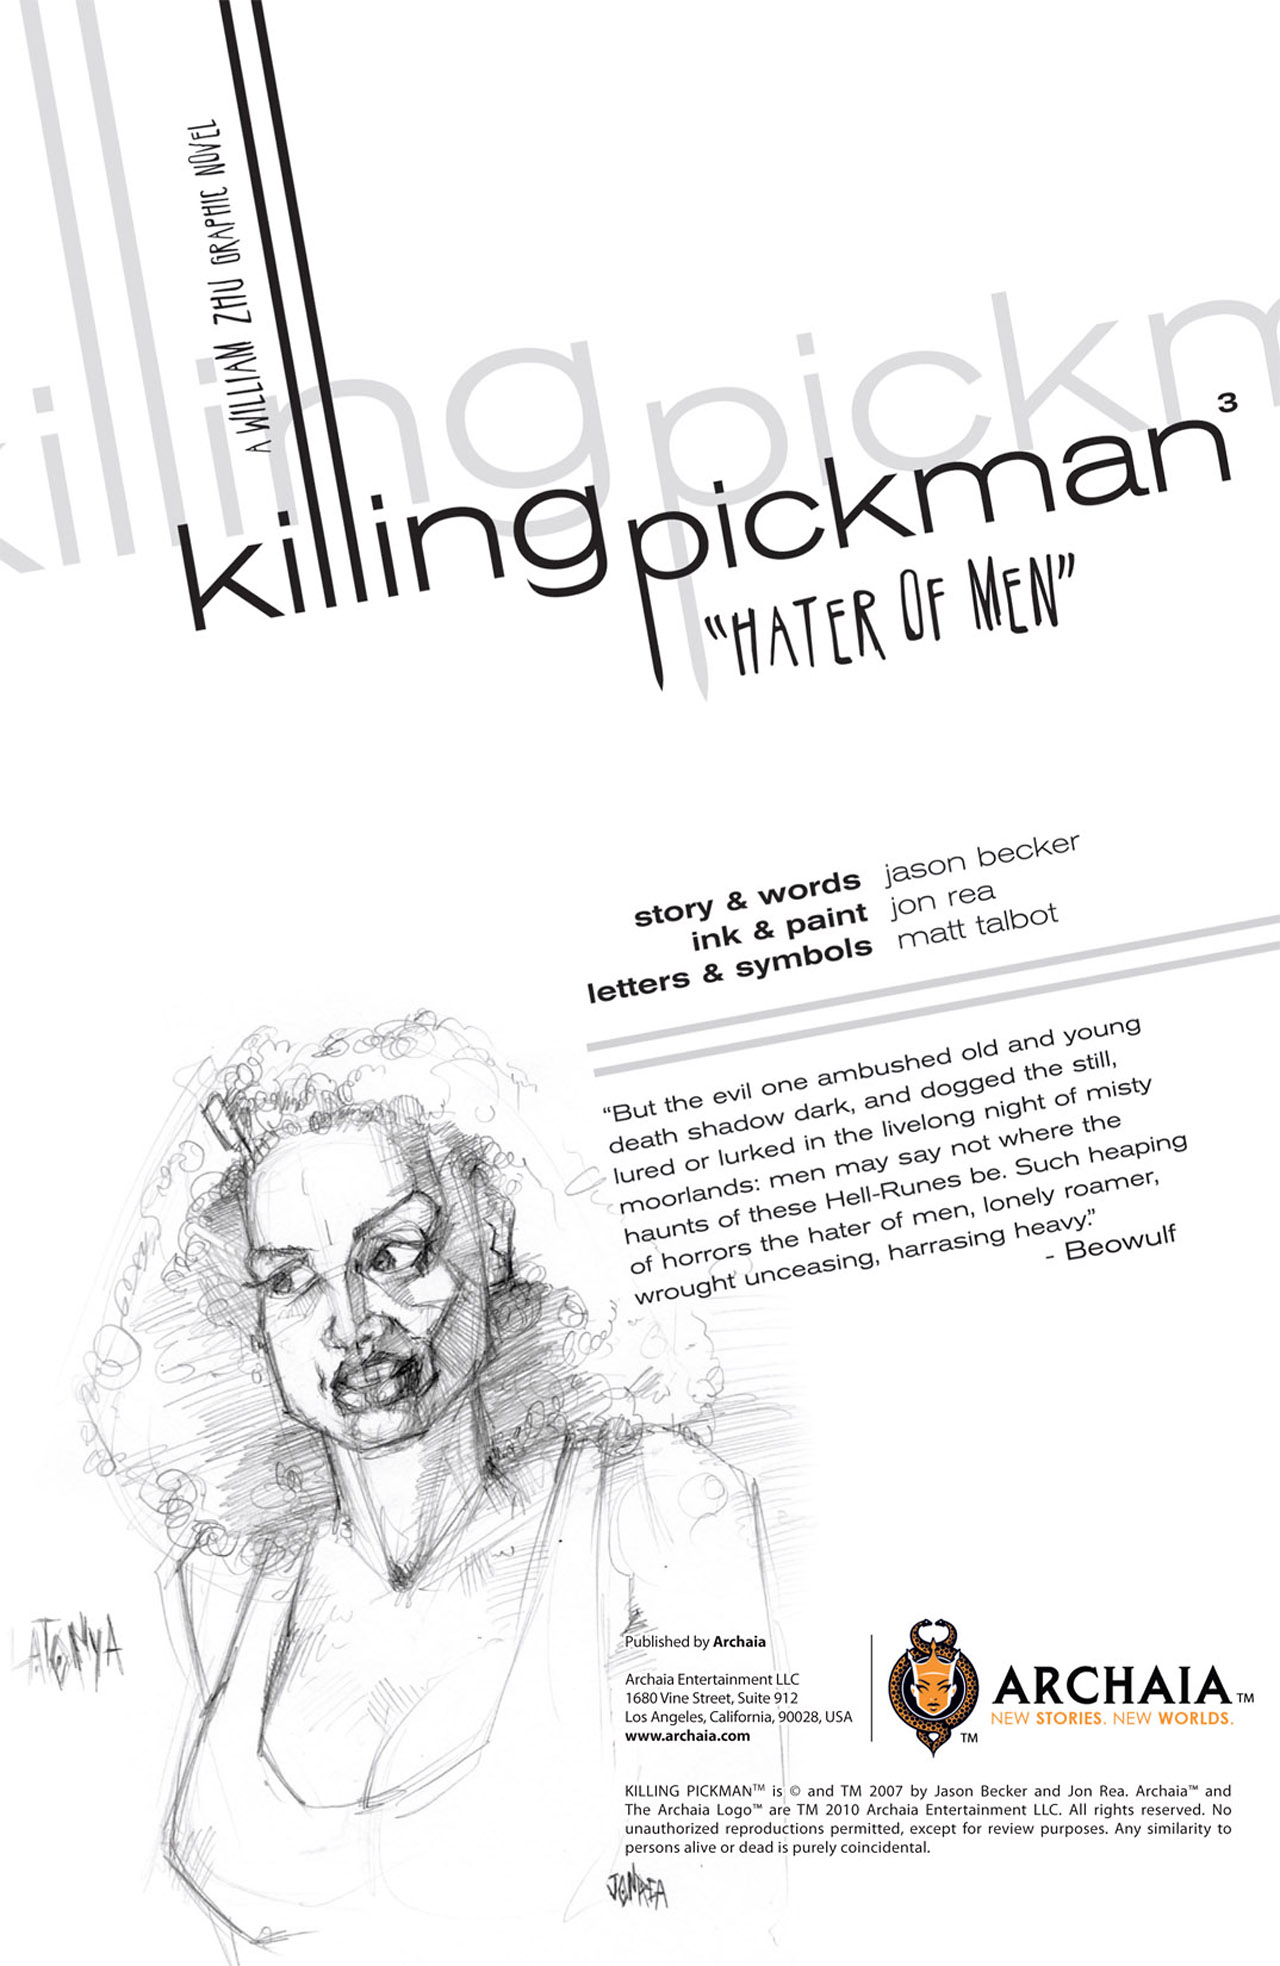 Killing Pickman 3 - Hater of Men